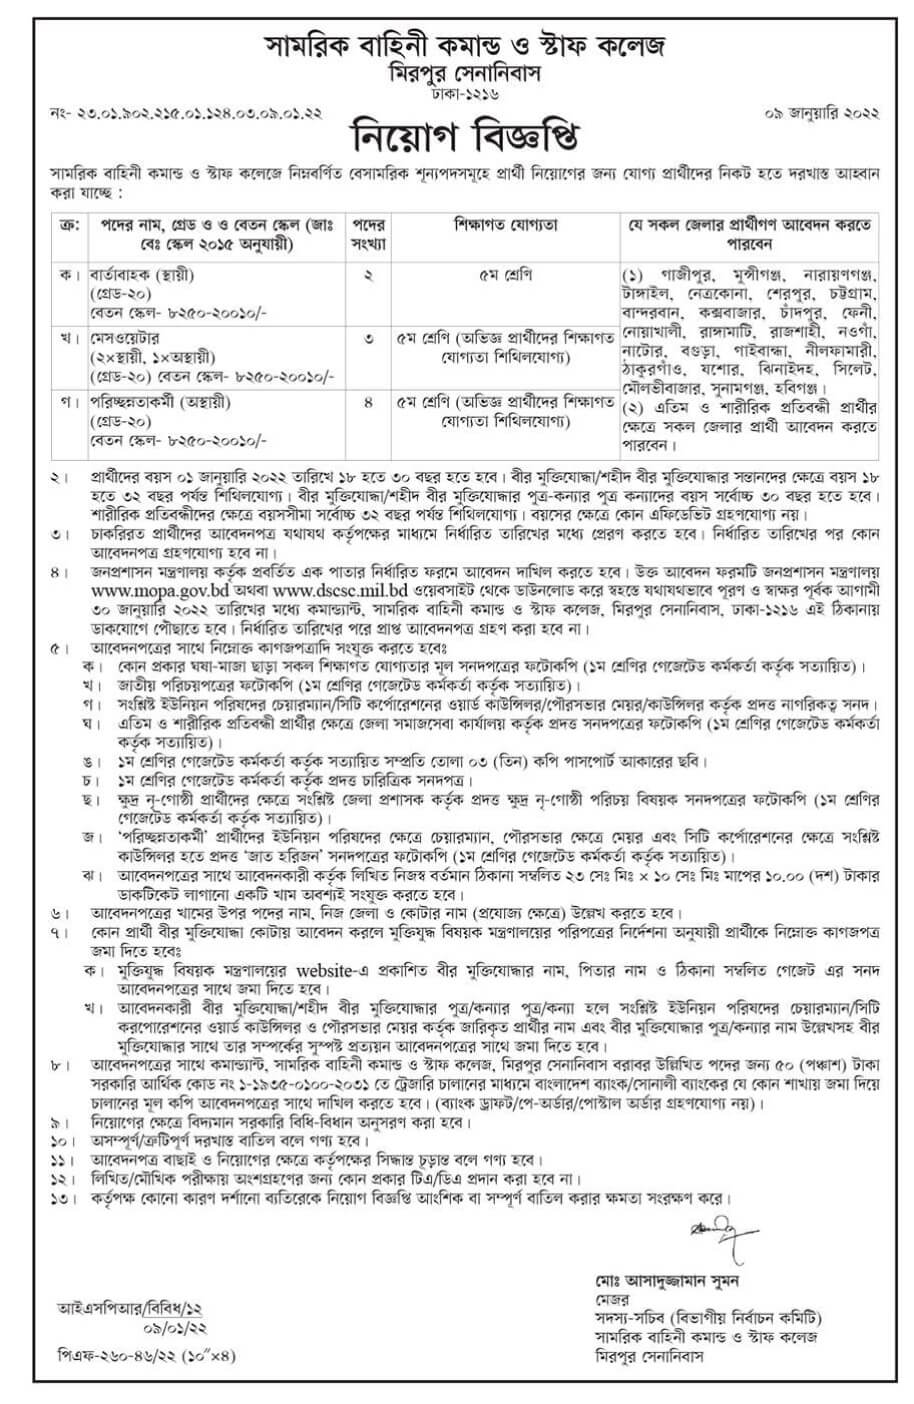 Dhaka Cantonment Job Circular image 2022